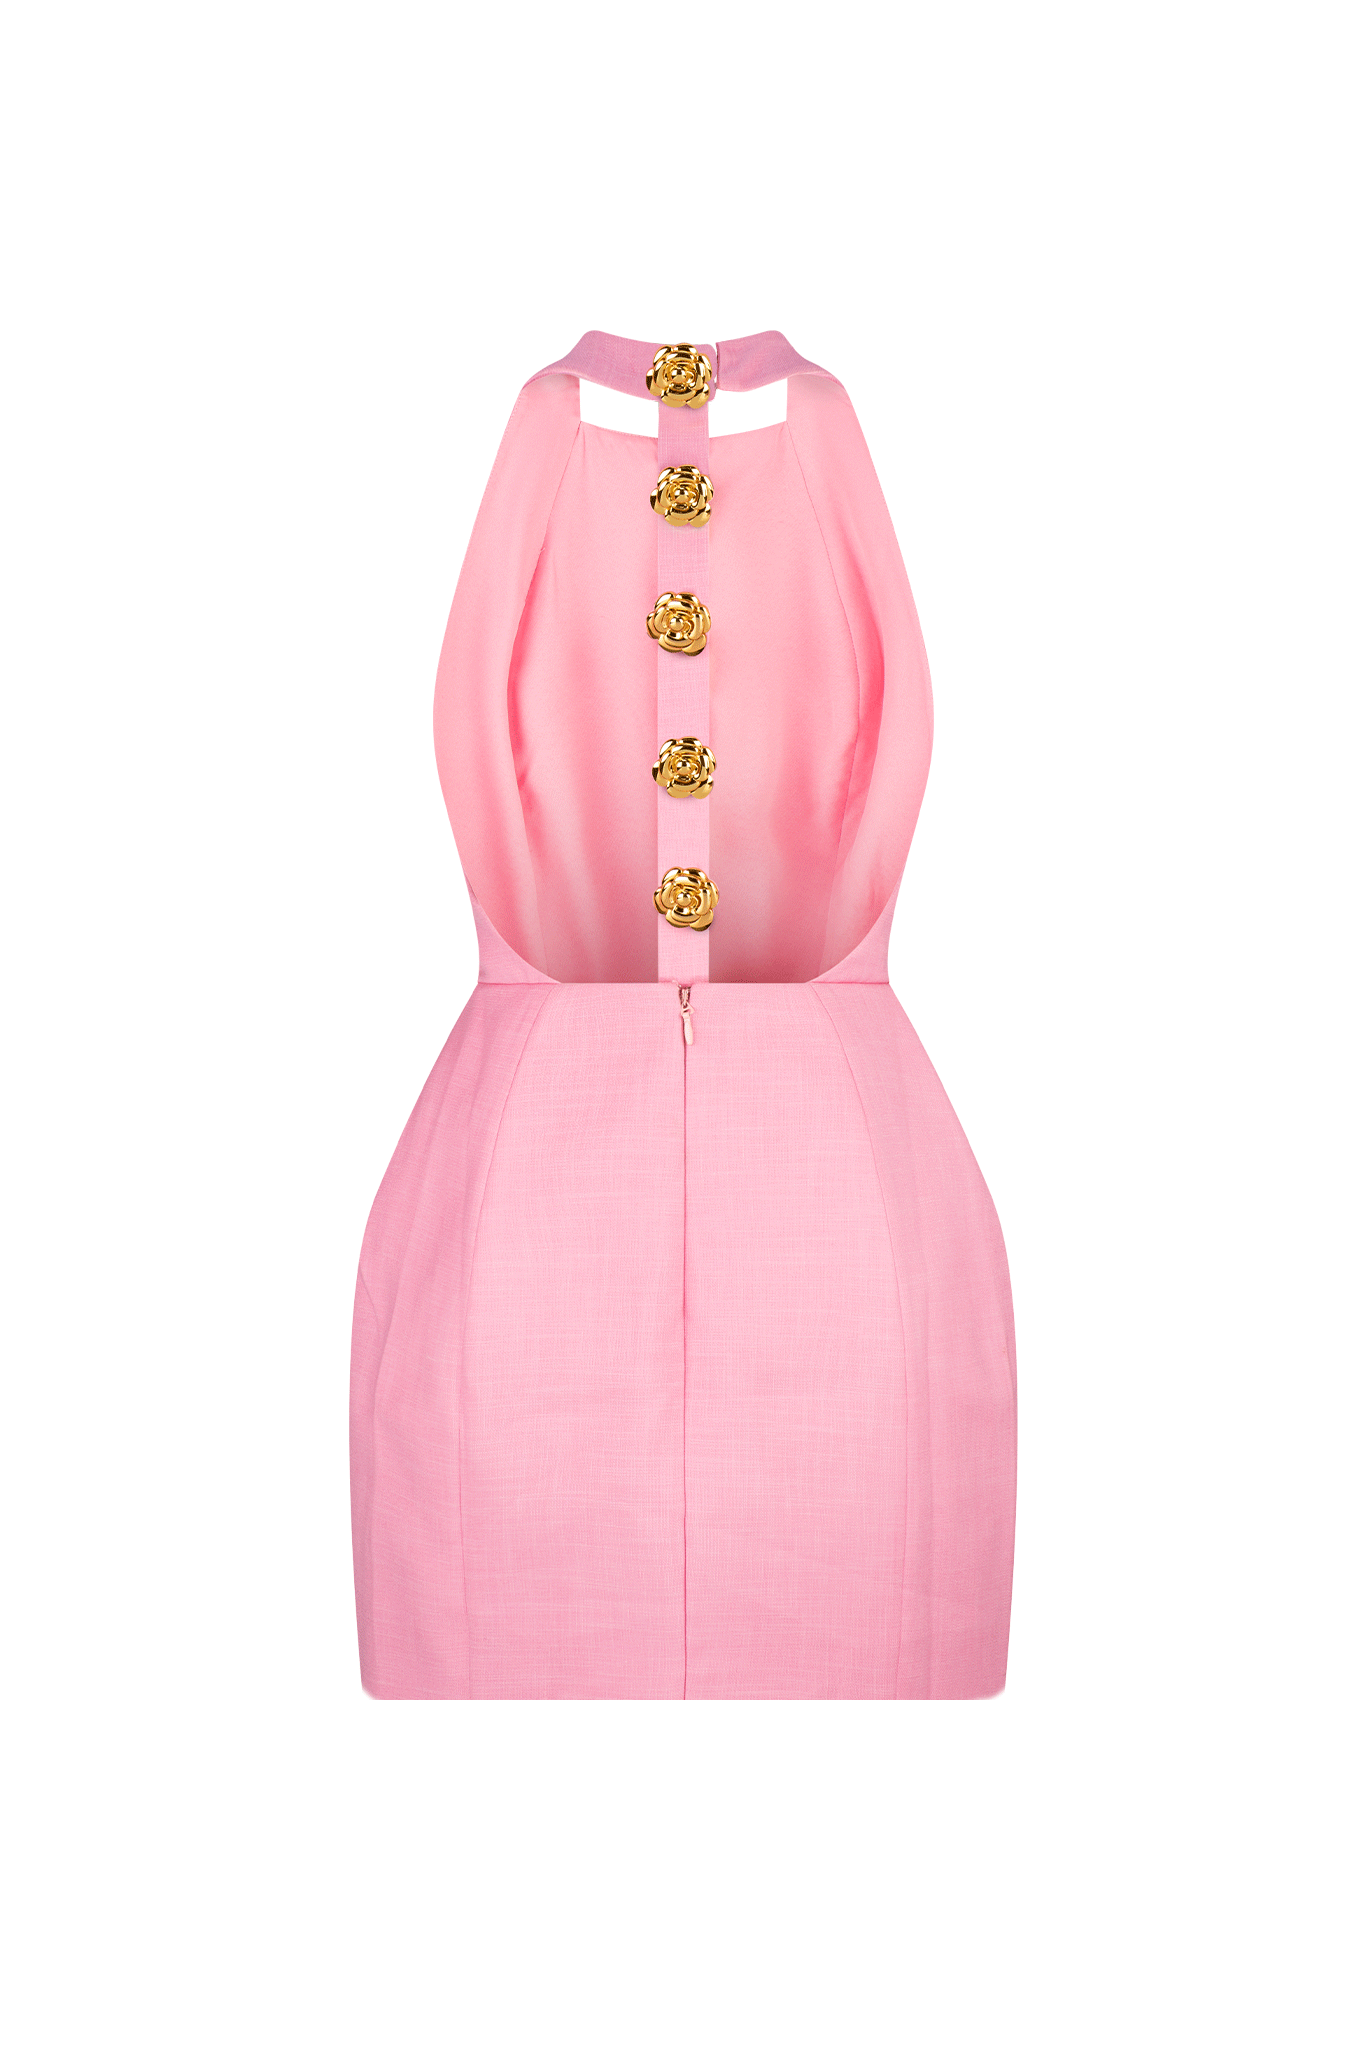 Tiffany Dress | Pre-Order